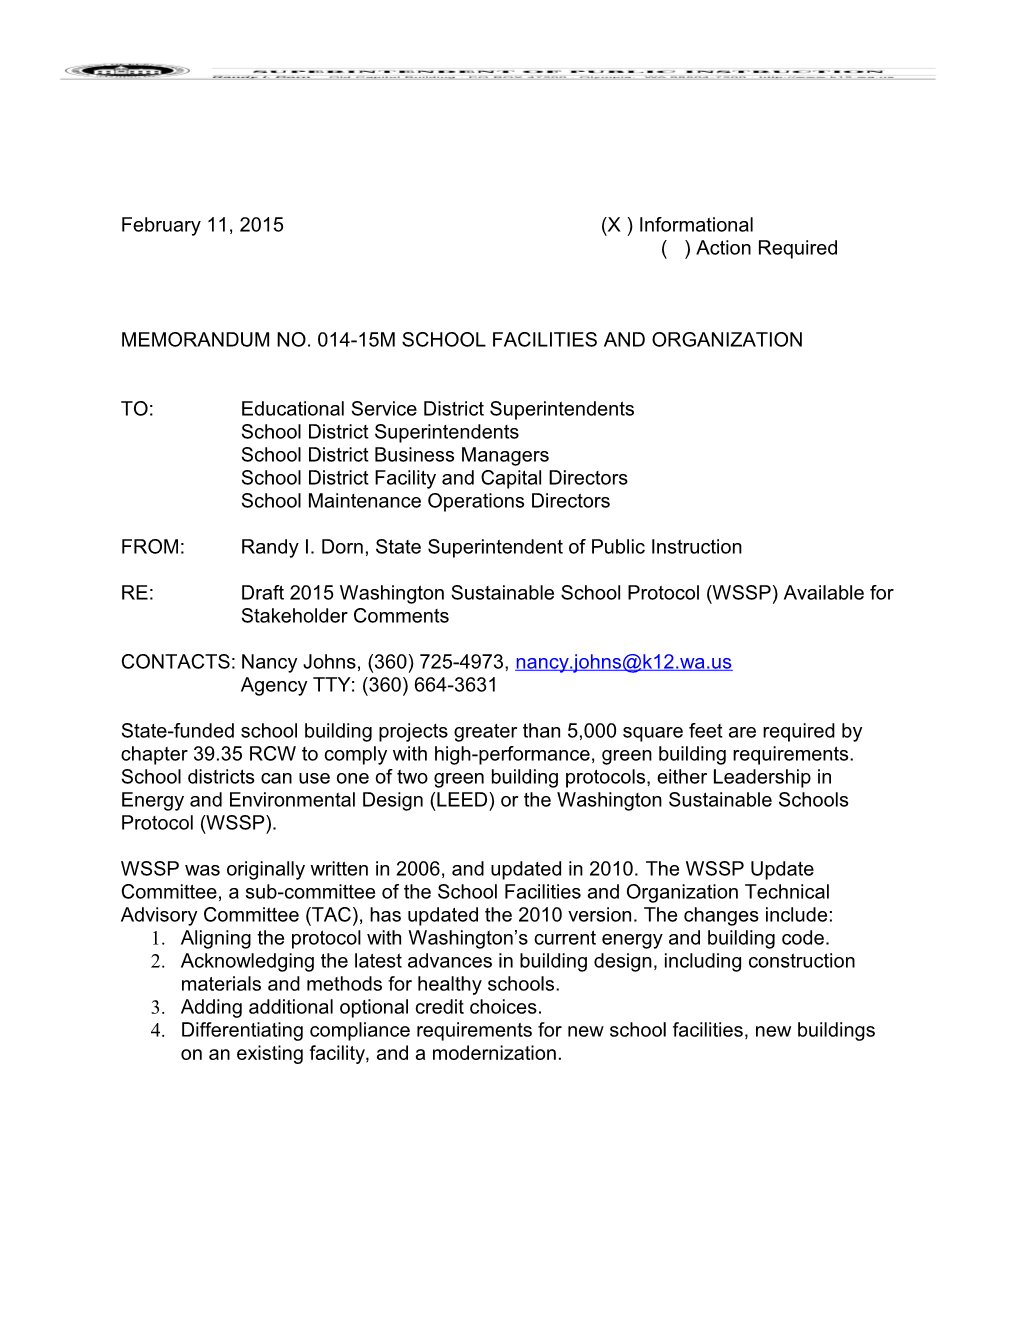 Memorandum No. 014-15Mschool Facilities and Organization